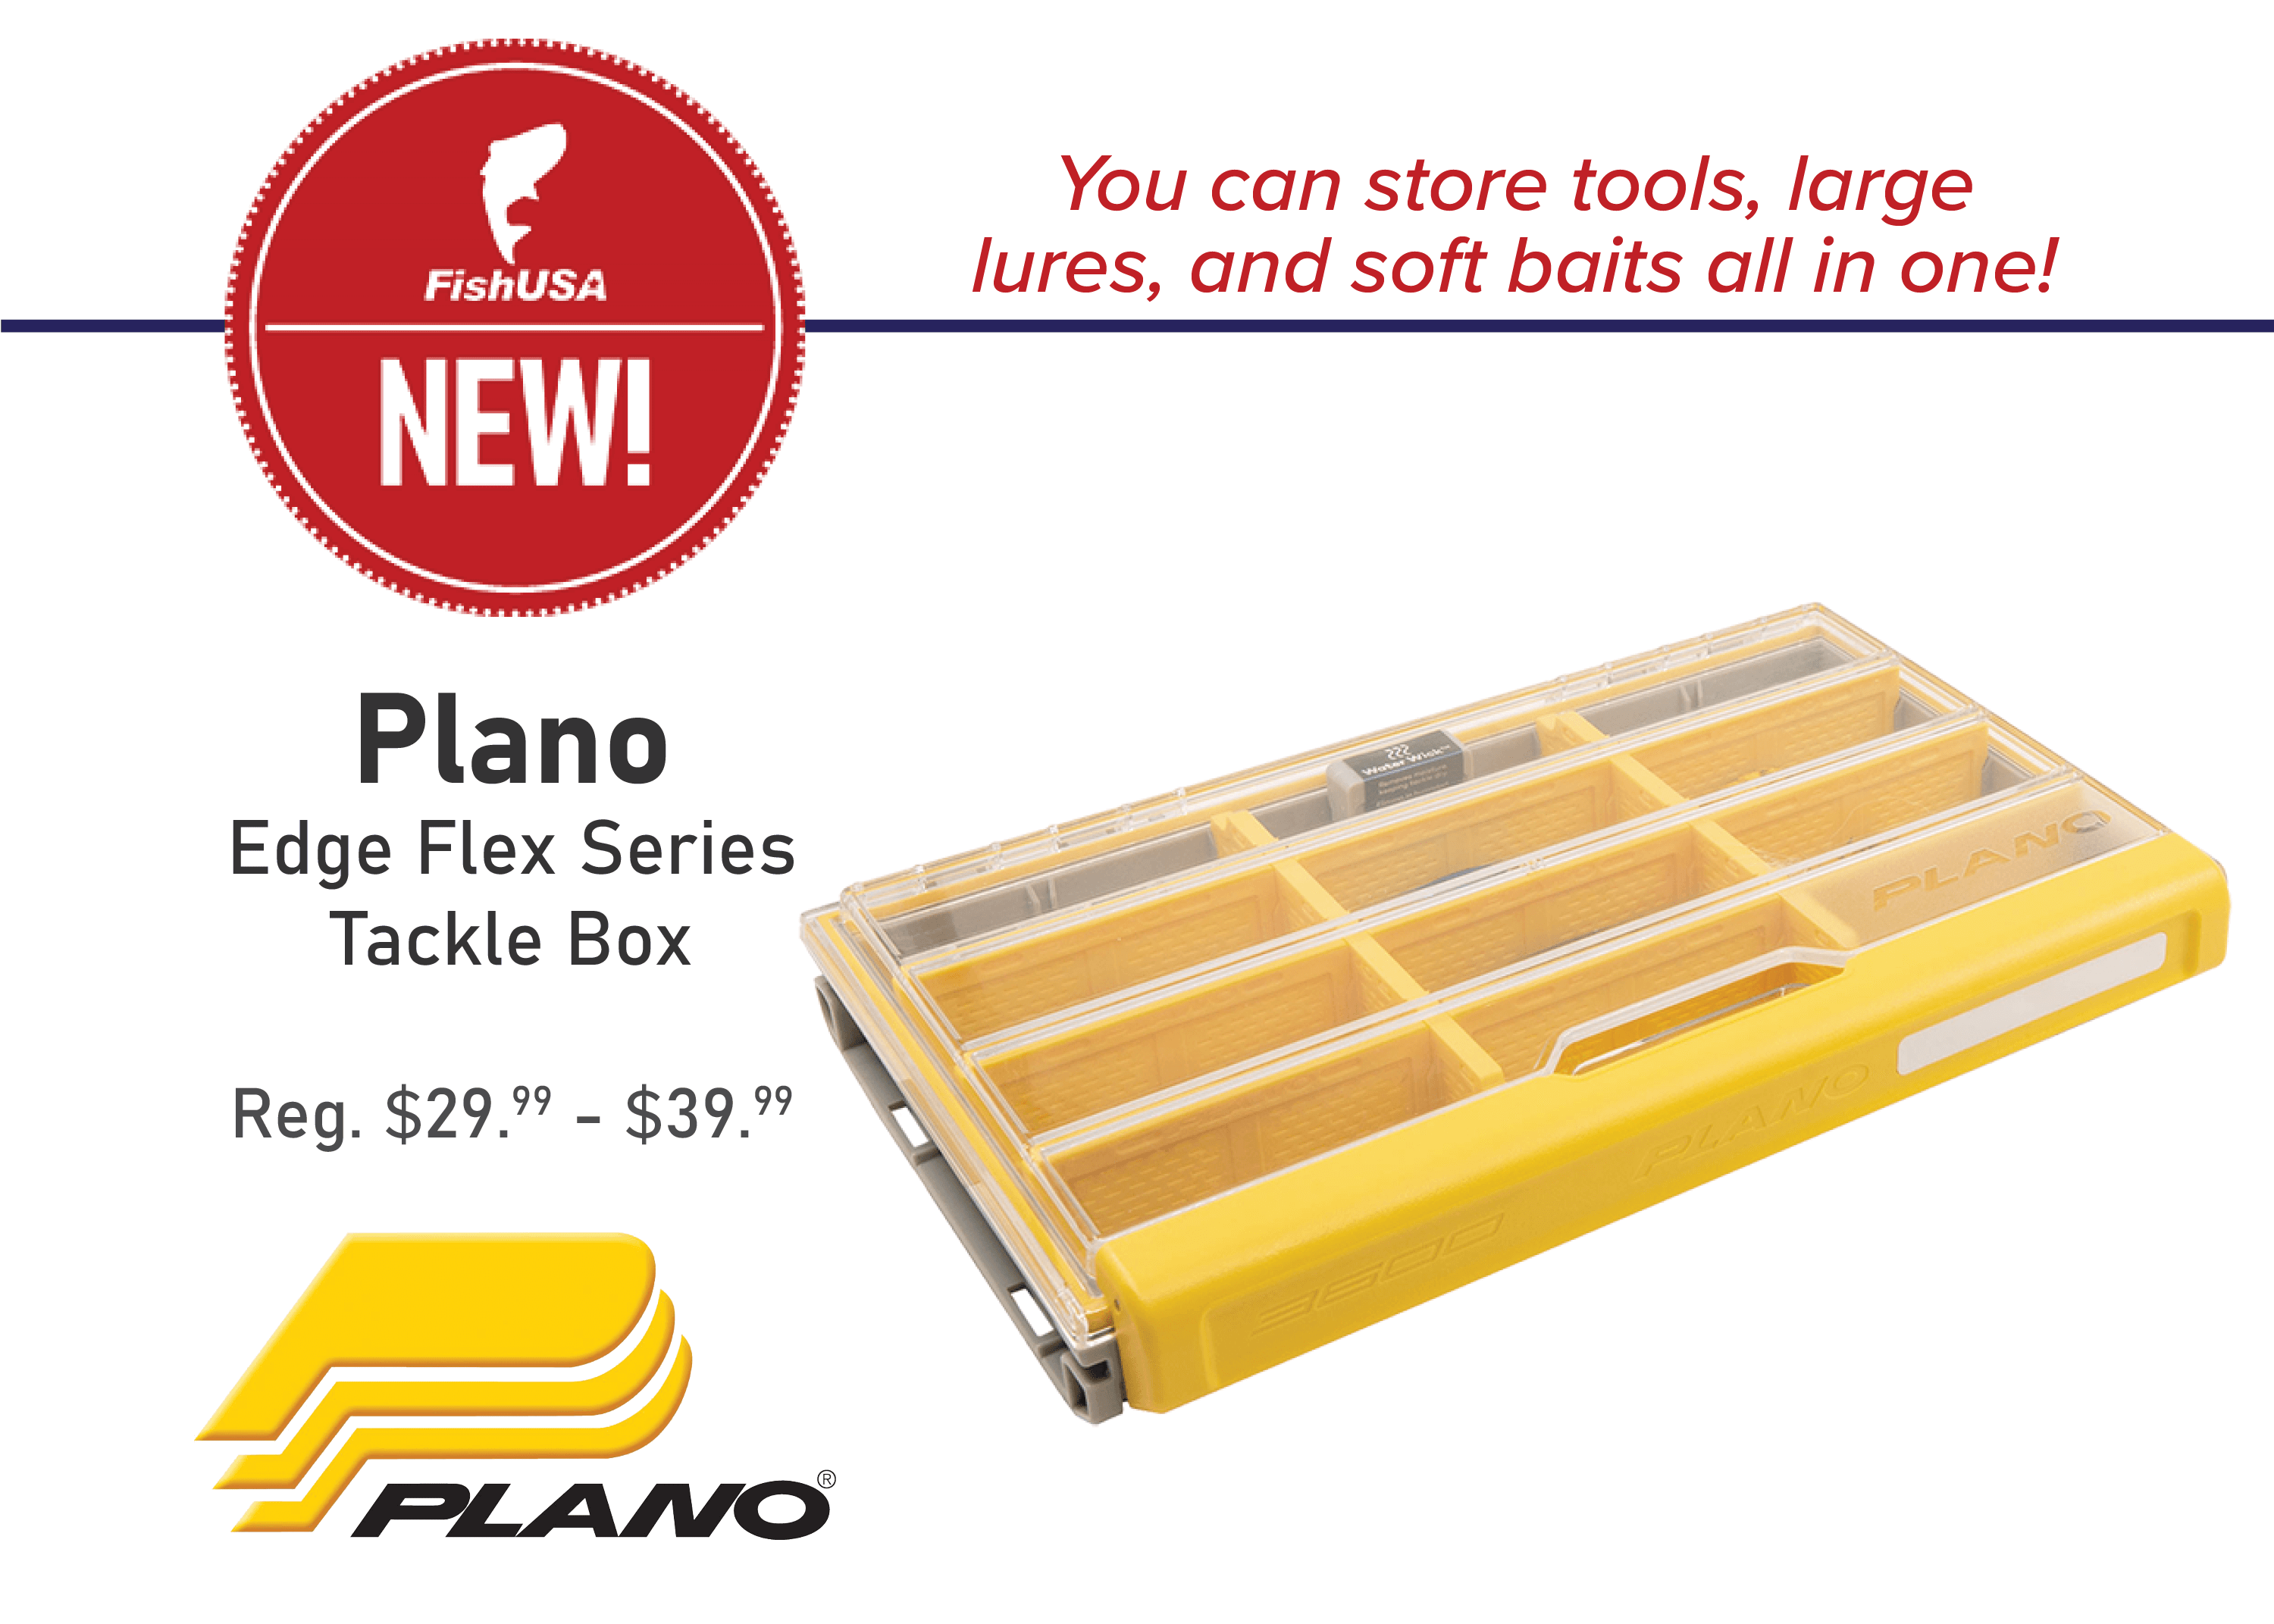 Plano Edge Flex Series Tackle Box